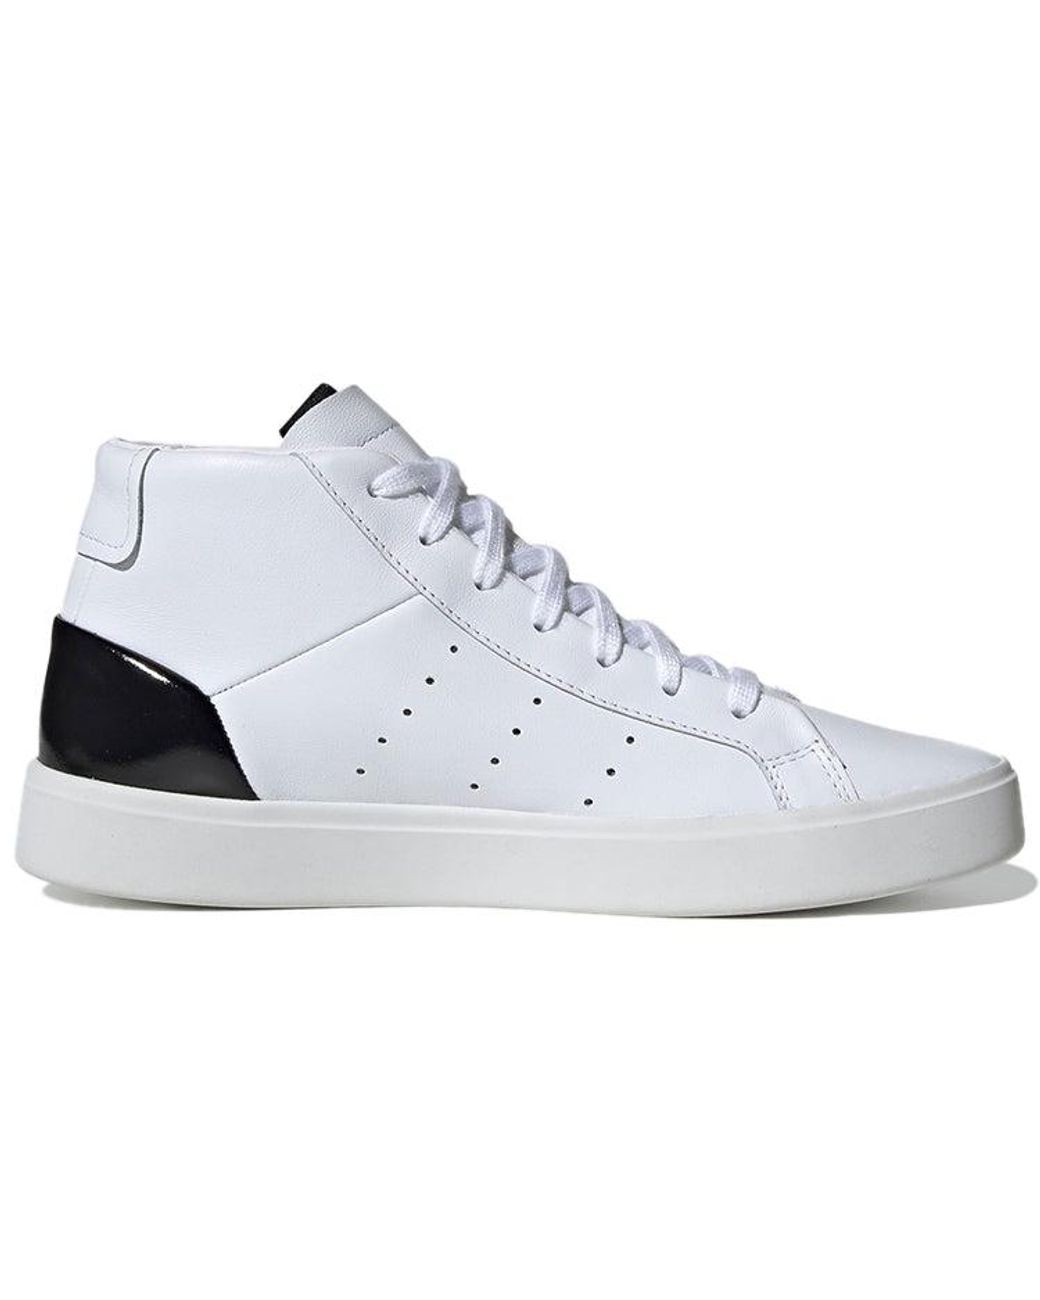 adidas Originals Sleek Mid Sneakers/shoes in White | Lyst